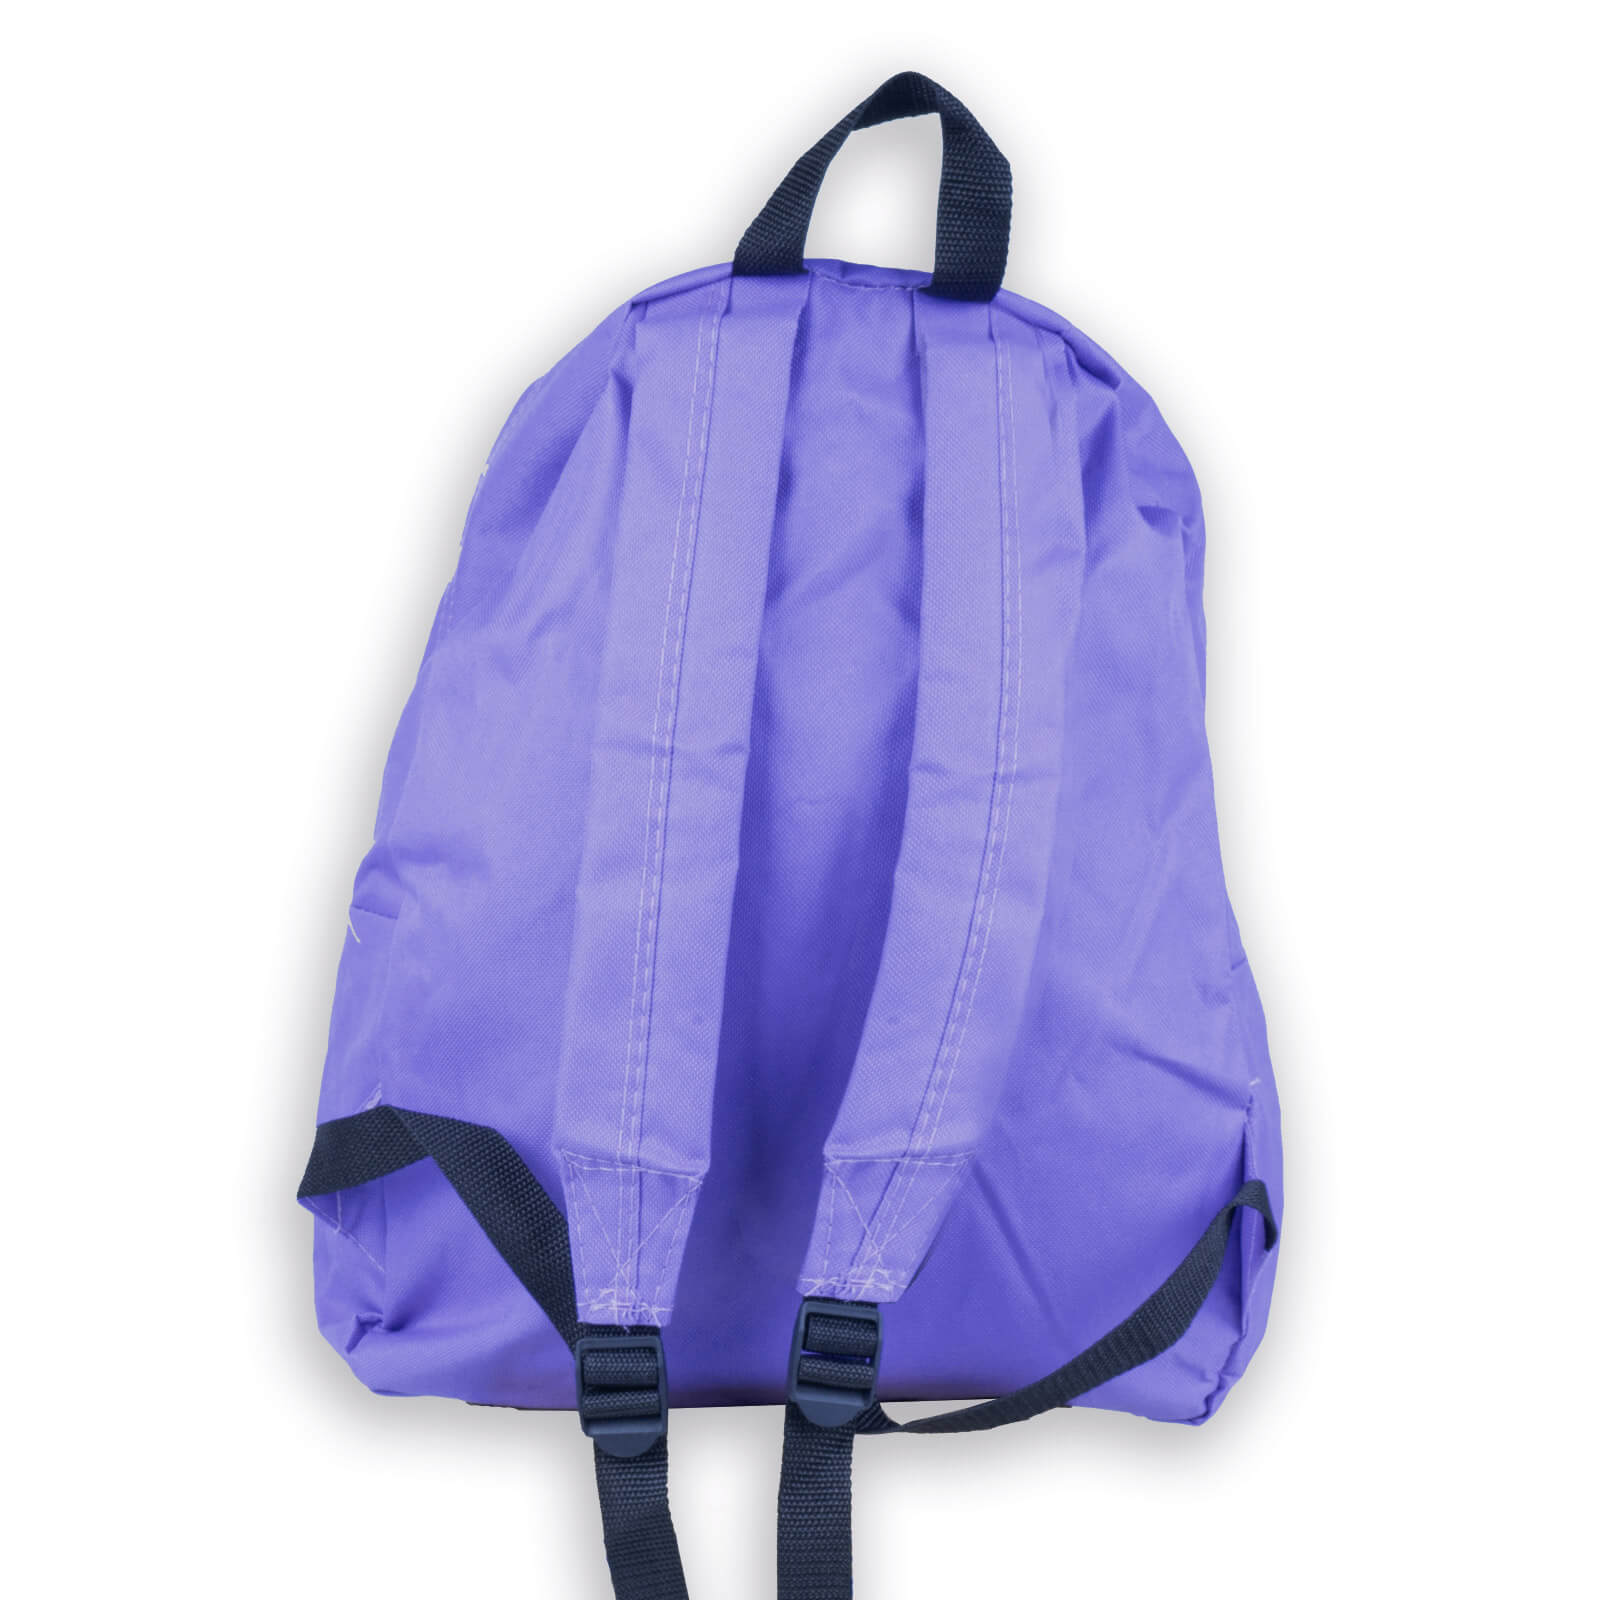 Backpack, 40 × 32 × 14 cm - Motive FIH Women's World Cup